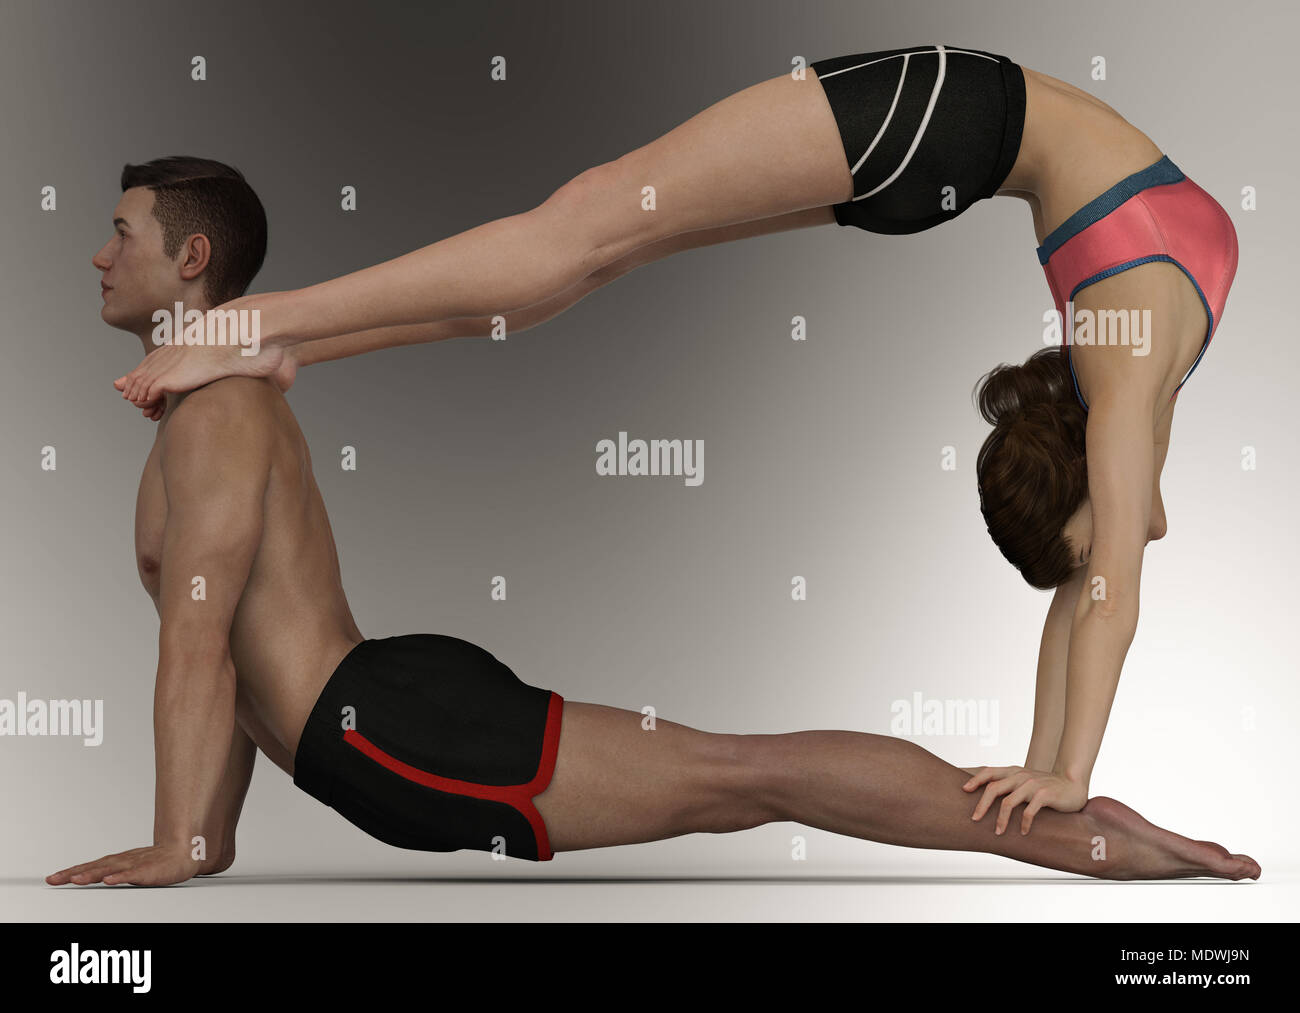 Advanced Partner Yoga Pose Couples Yoga 3d Illustration Stock Photo   Download Image Now  iStock